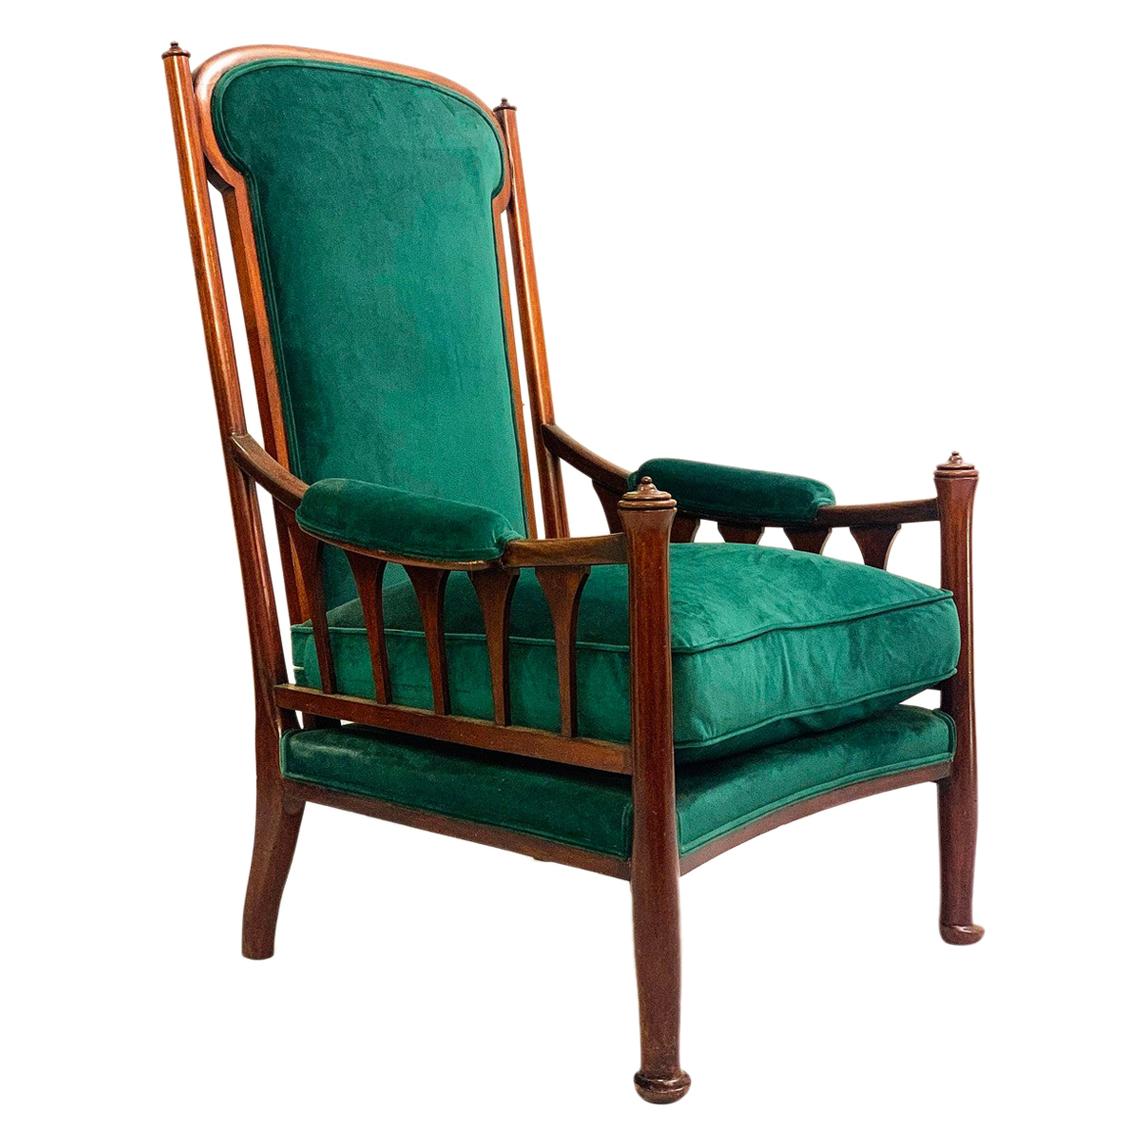 English Art Nouveau Armchair, New Green Velvet Upholstery